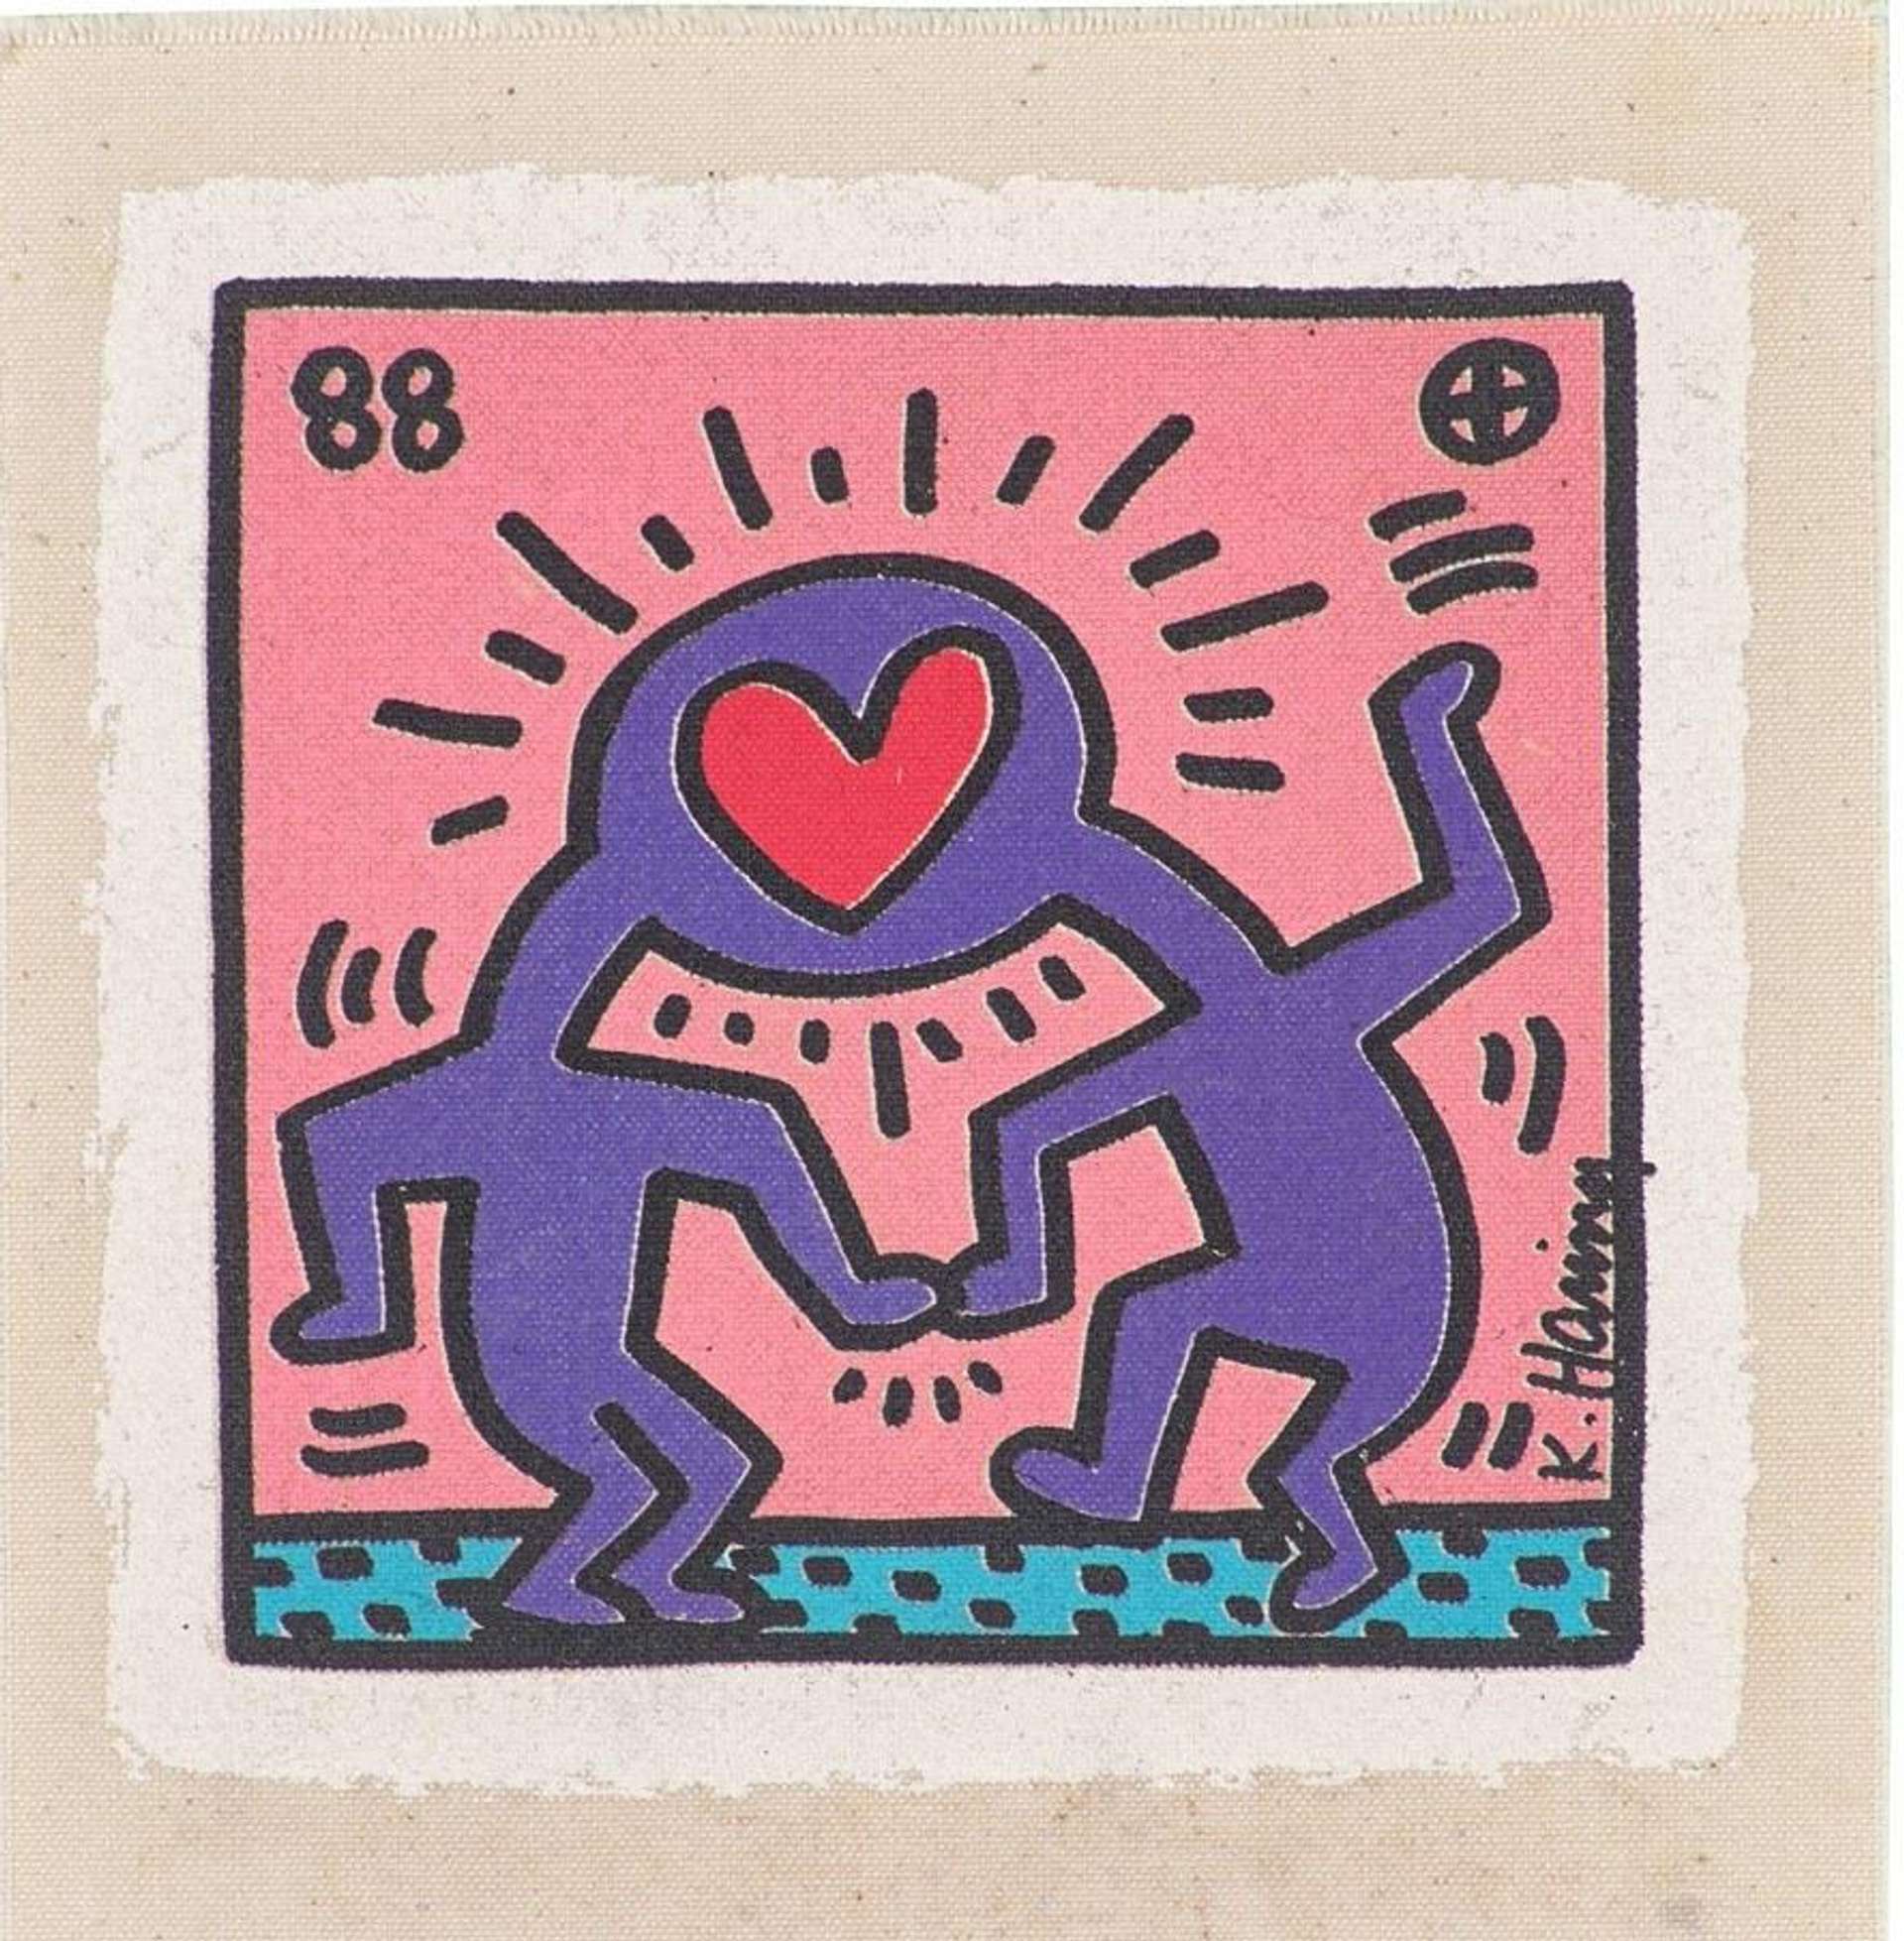 Dr Winkies Wedding Invitation - Signed Print by Keith Haring 1988 - MyArtBroker